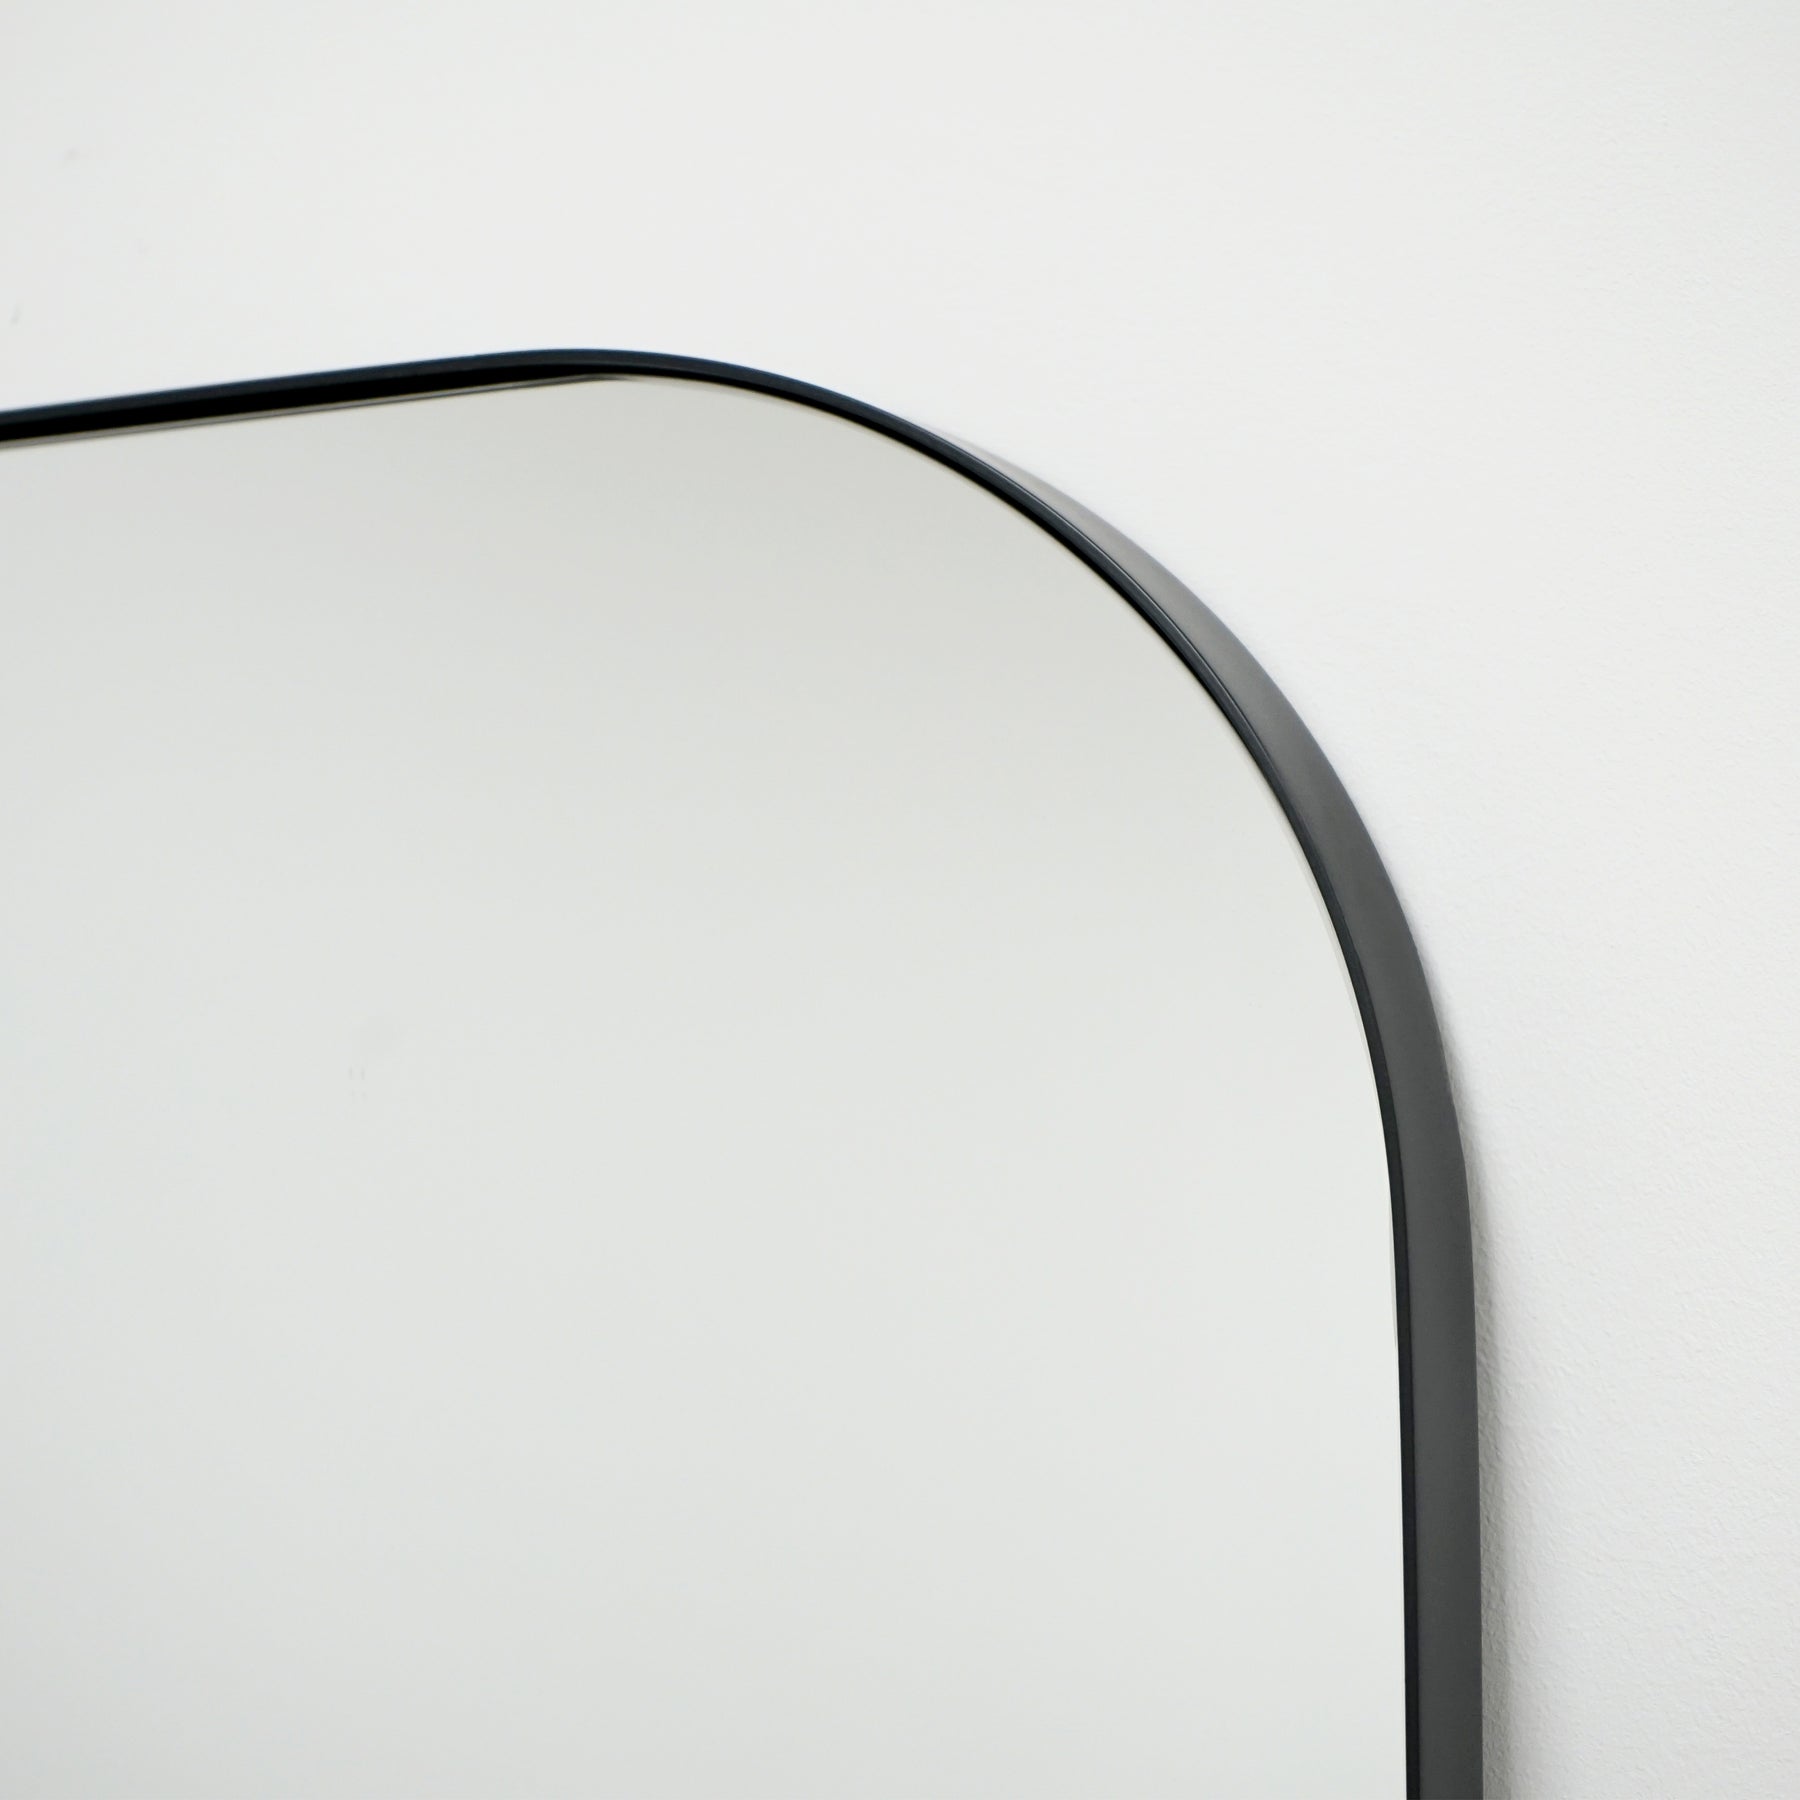 Theo - Full Length Black Curved Large Metal Mirror 180cm x 90cm